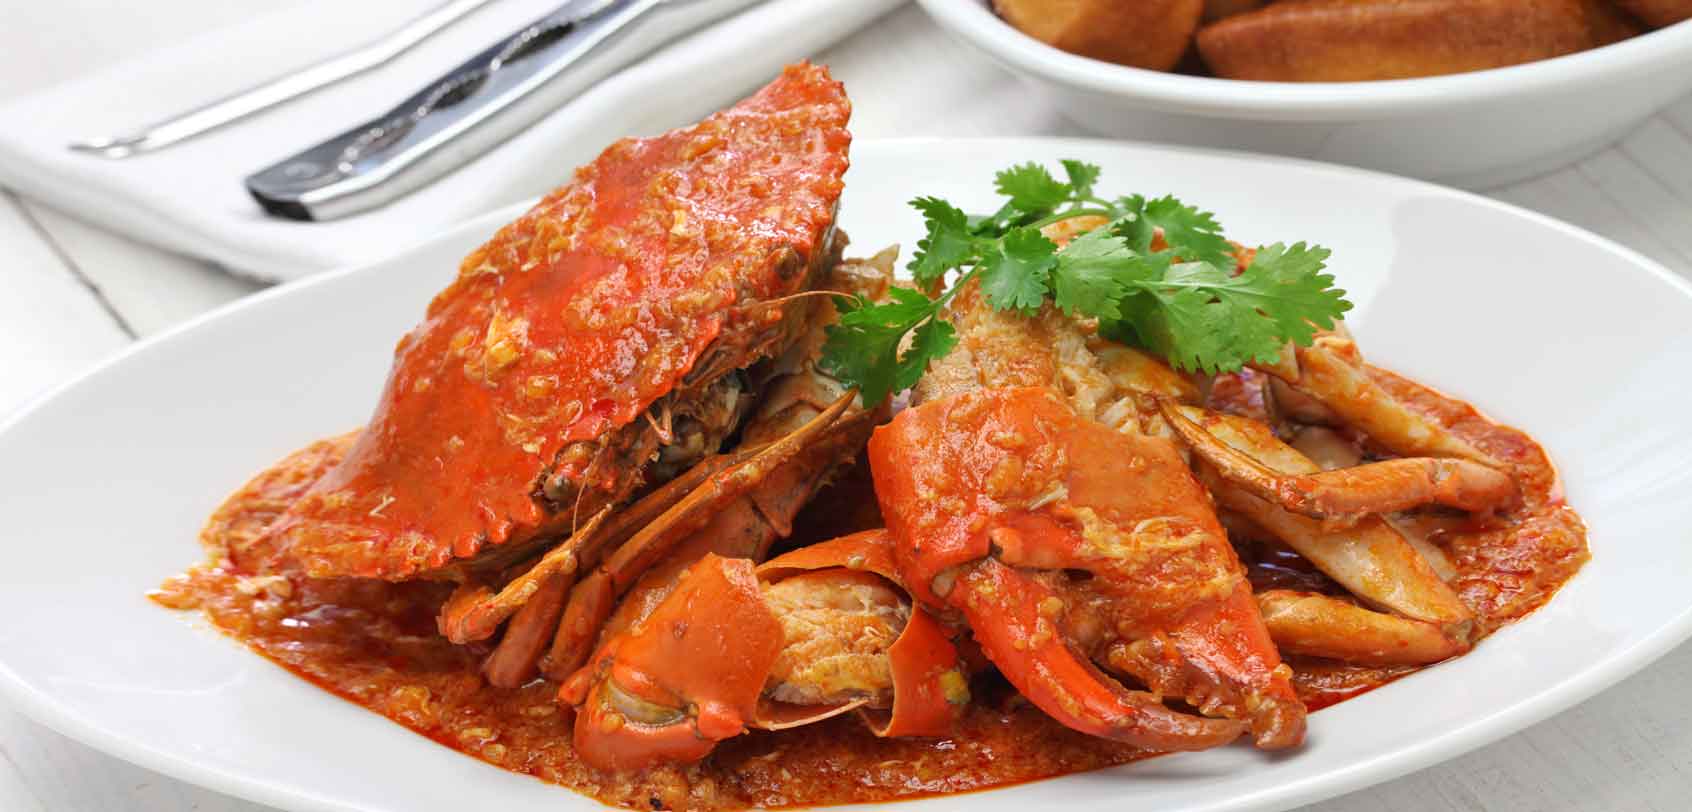 Singapore Food: Chili Crab